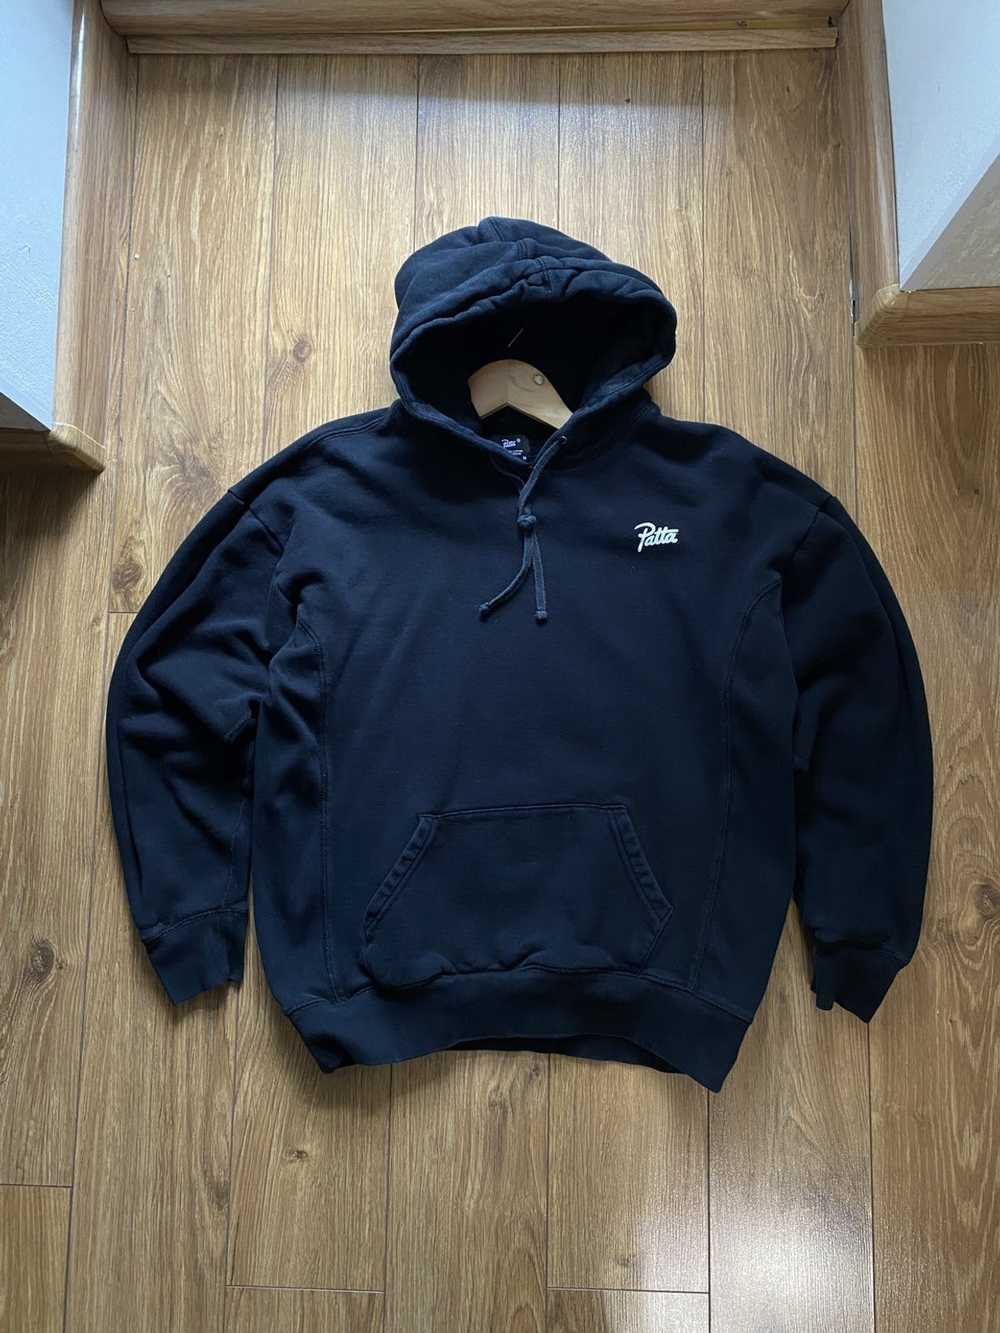 Patta × Streetwear Patta black hoodie size S-M - image 1